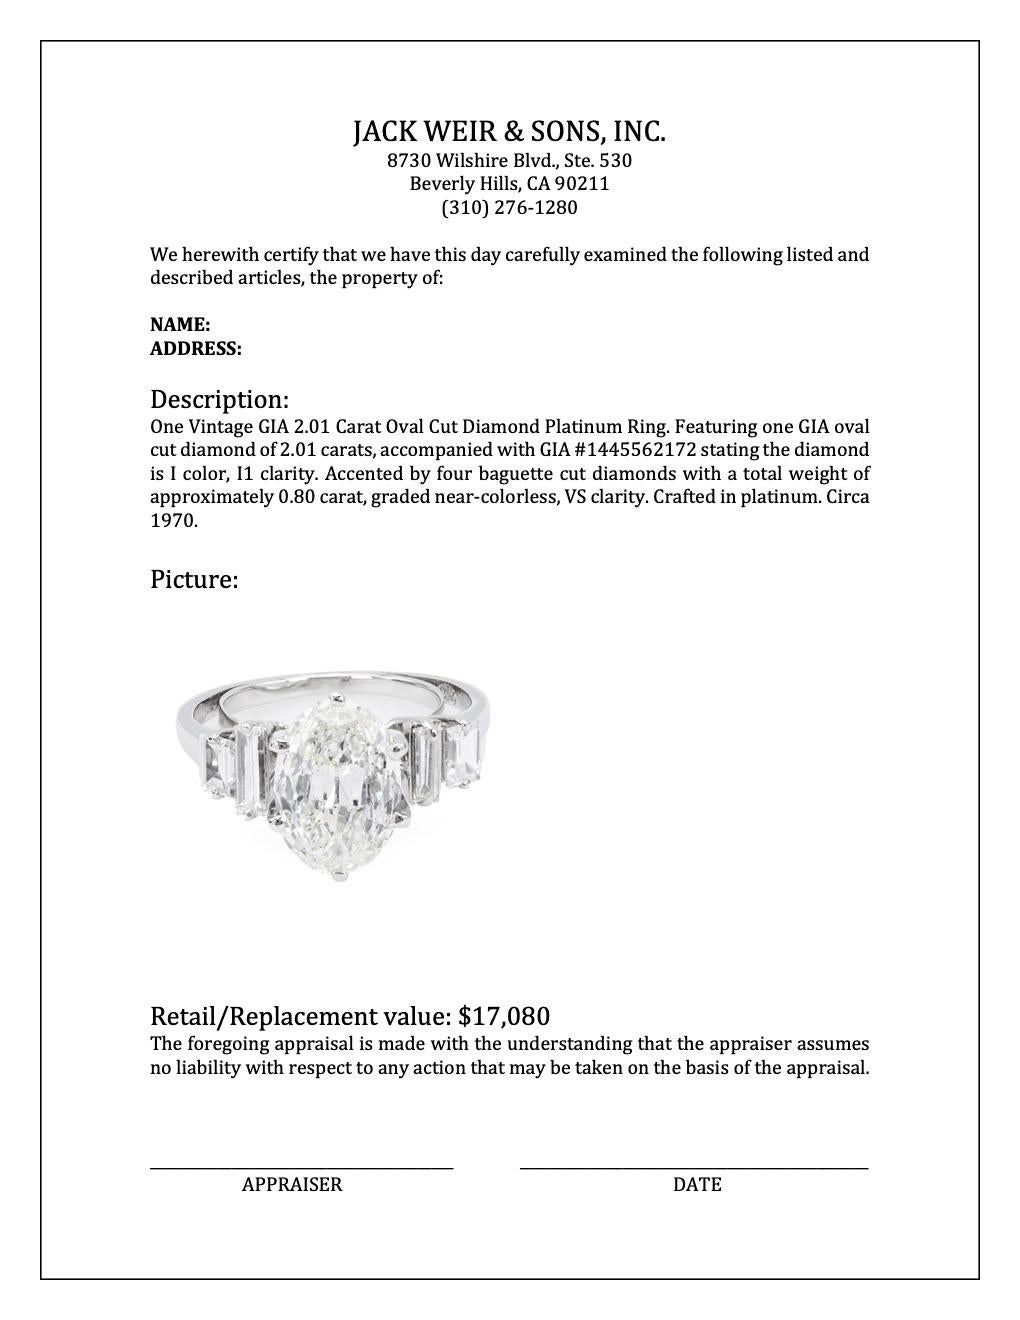 Vintage GIA 2.01 Carat Oval Cut Diamond Platinum Ring 4